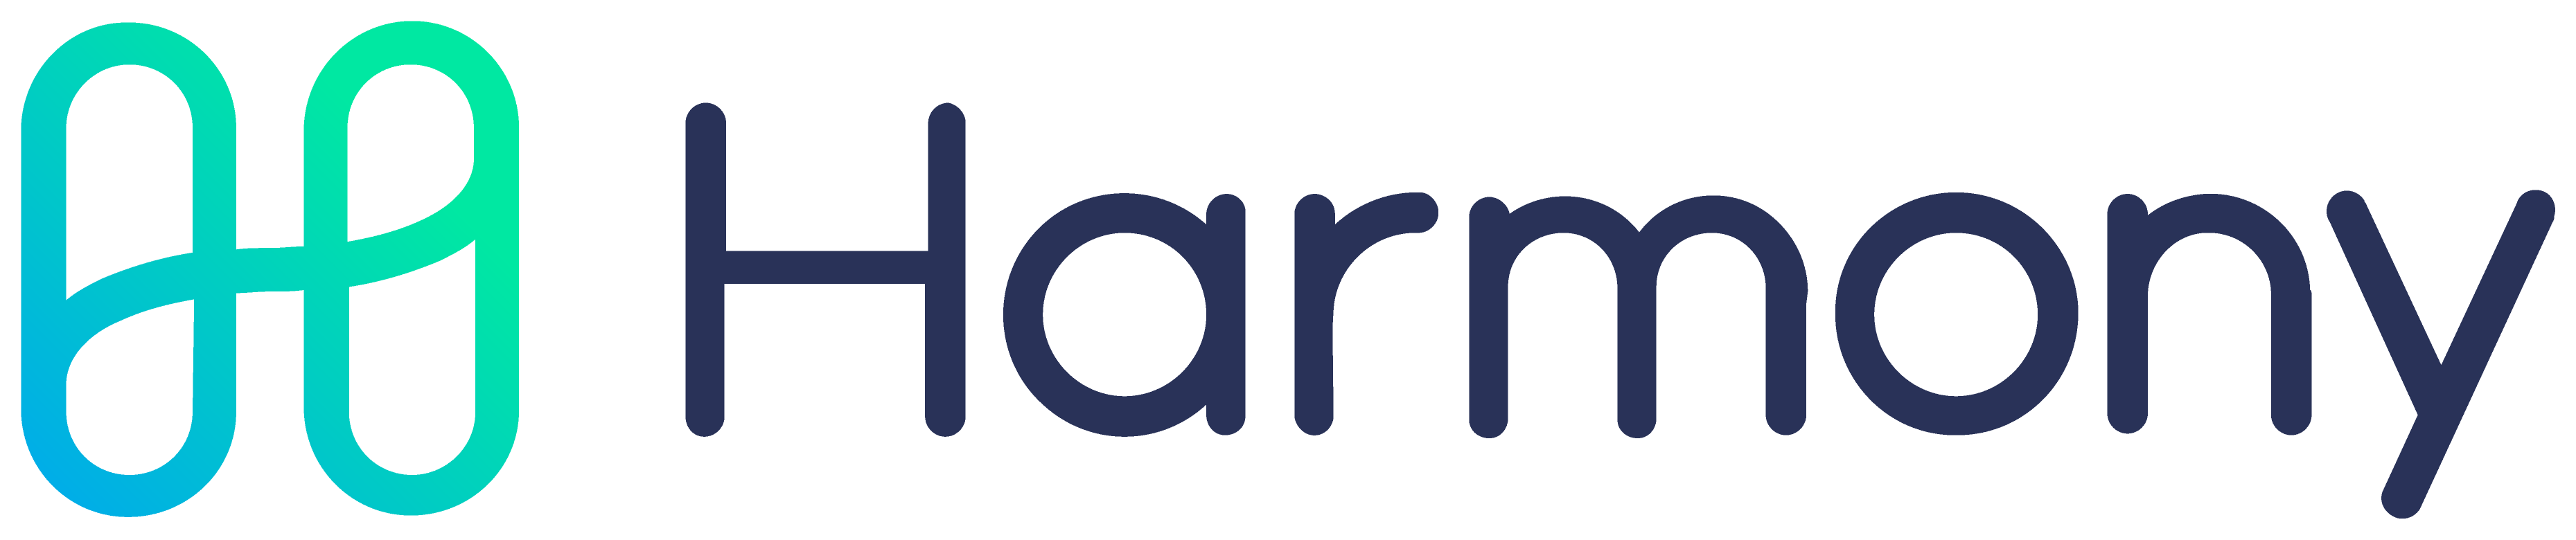 Harmony logo colors